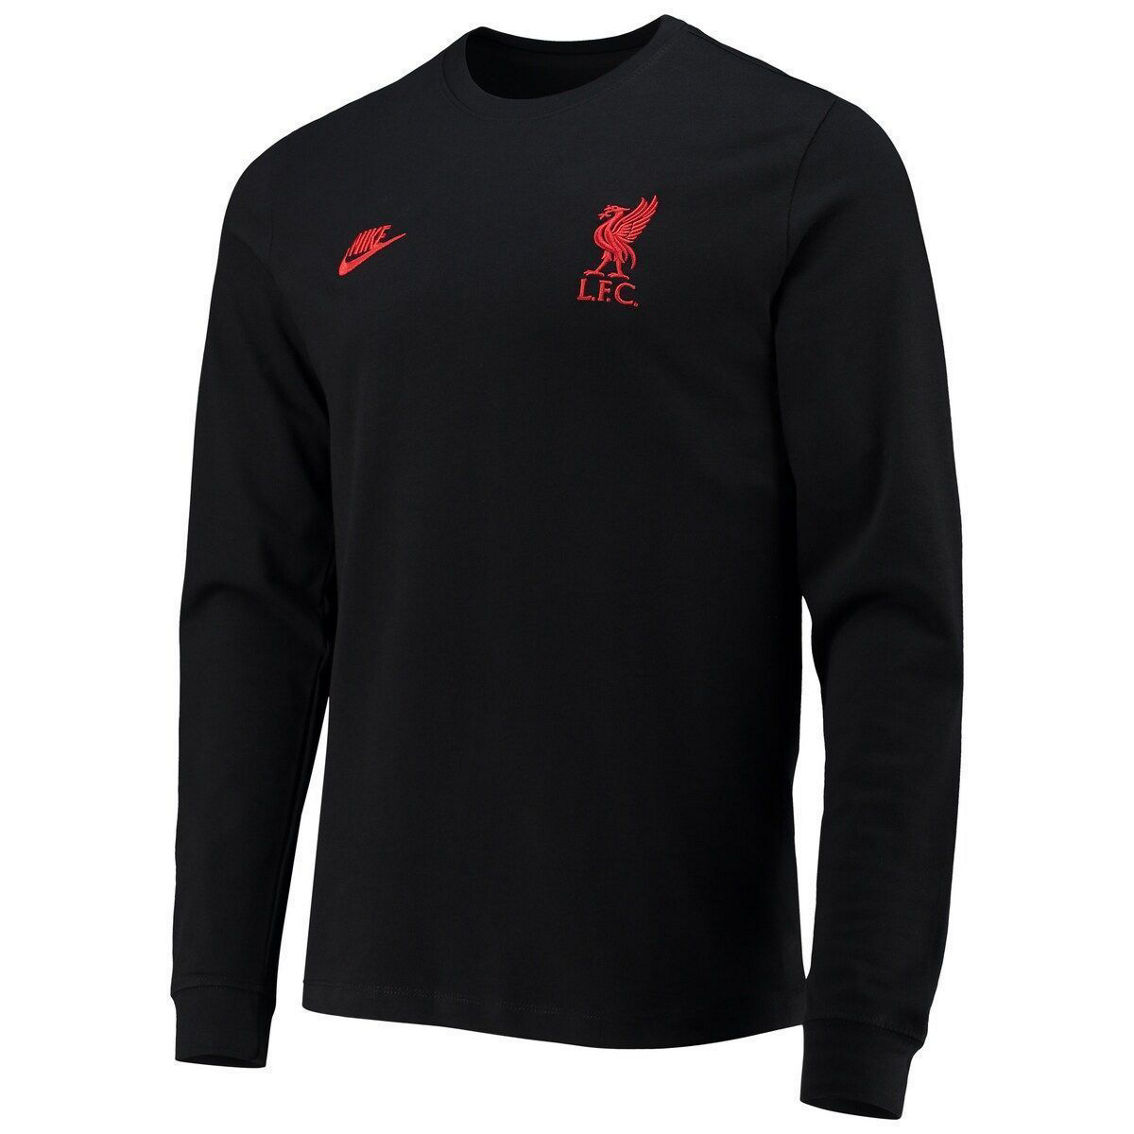 Nike Men's Black Liverpool Futura Travel Long Sleeve T-Shirt - Image 3 of 4